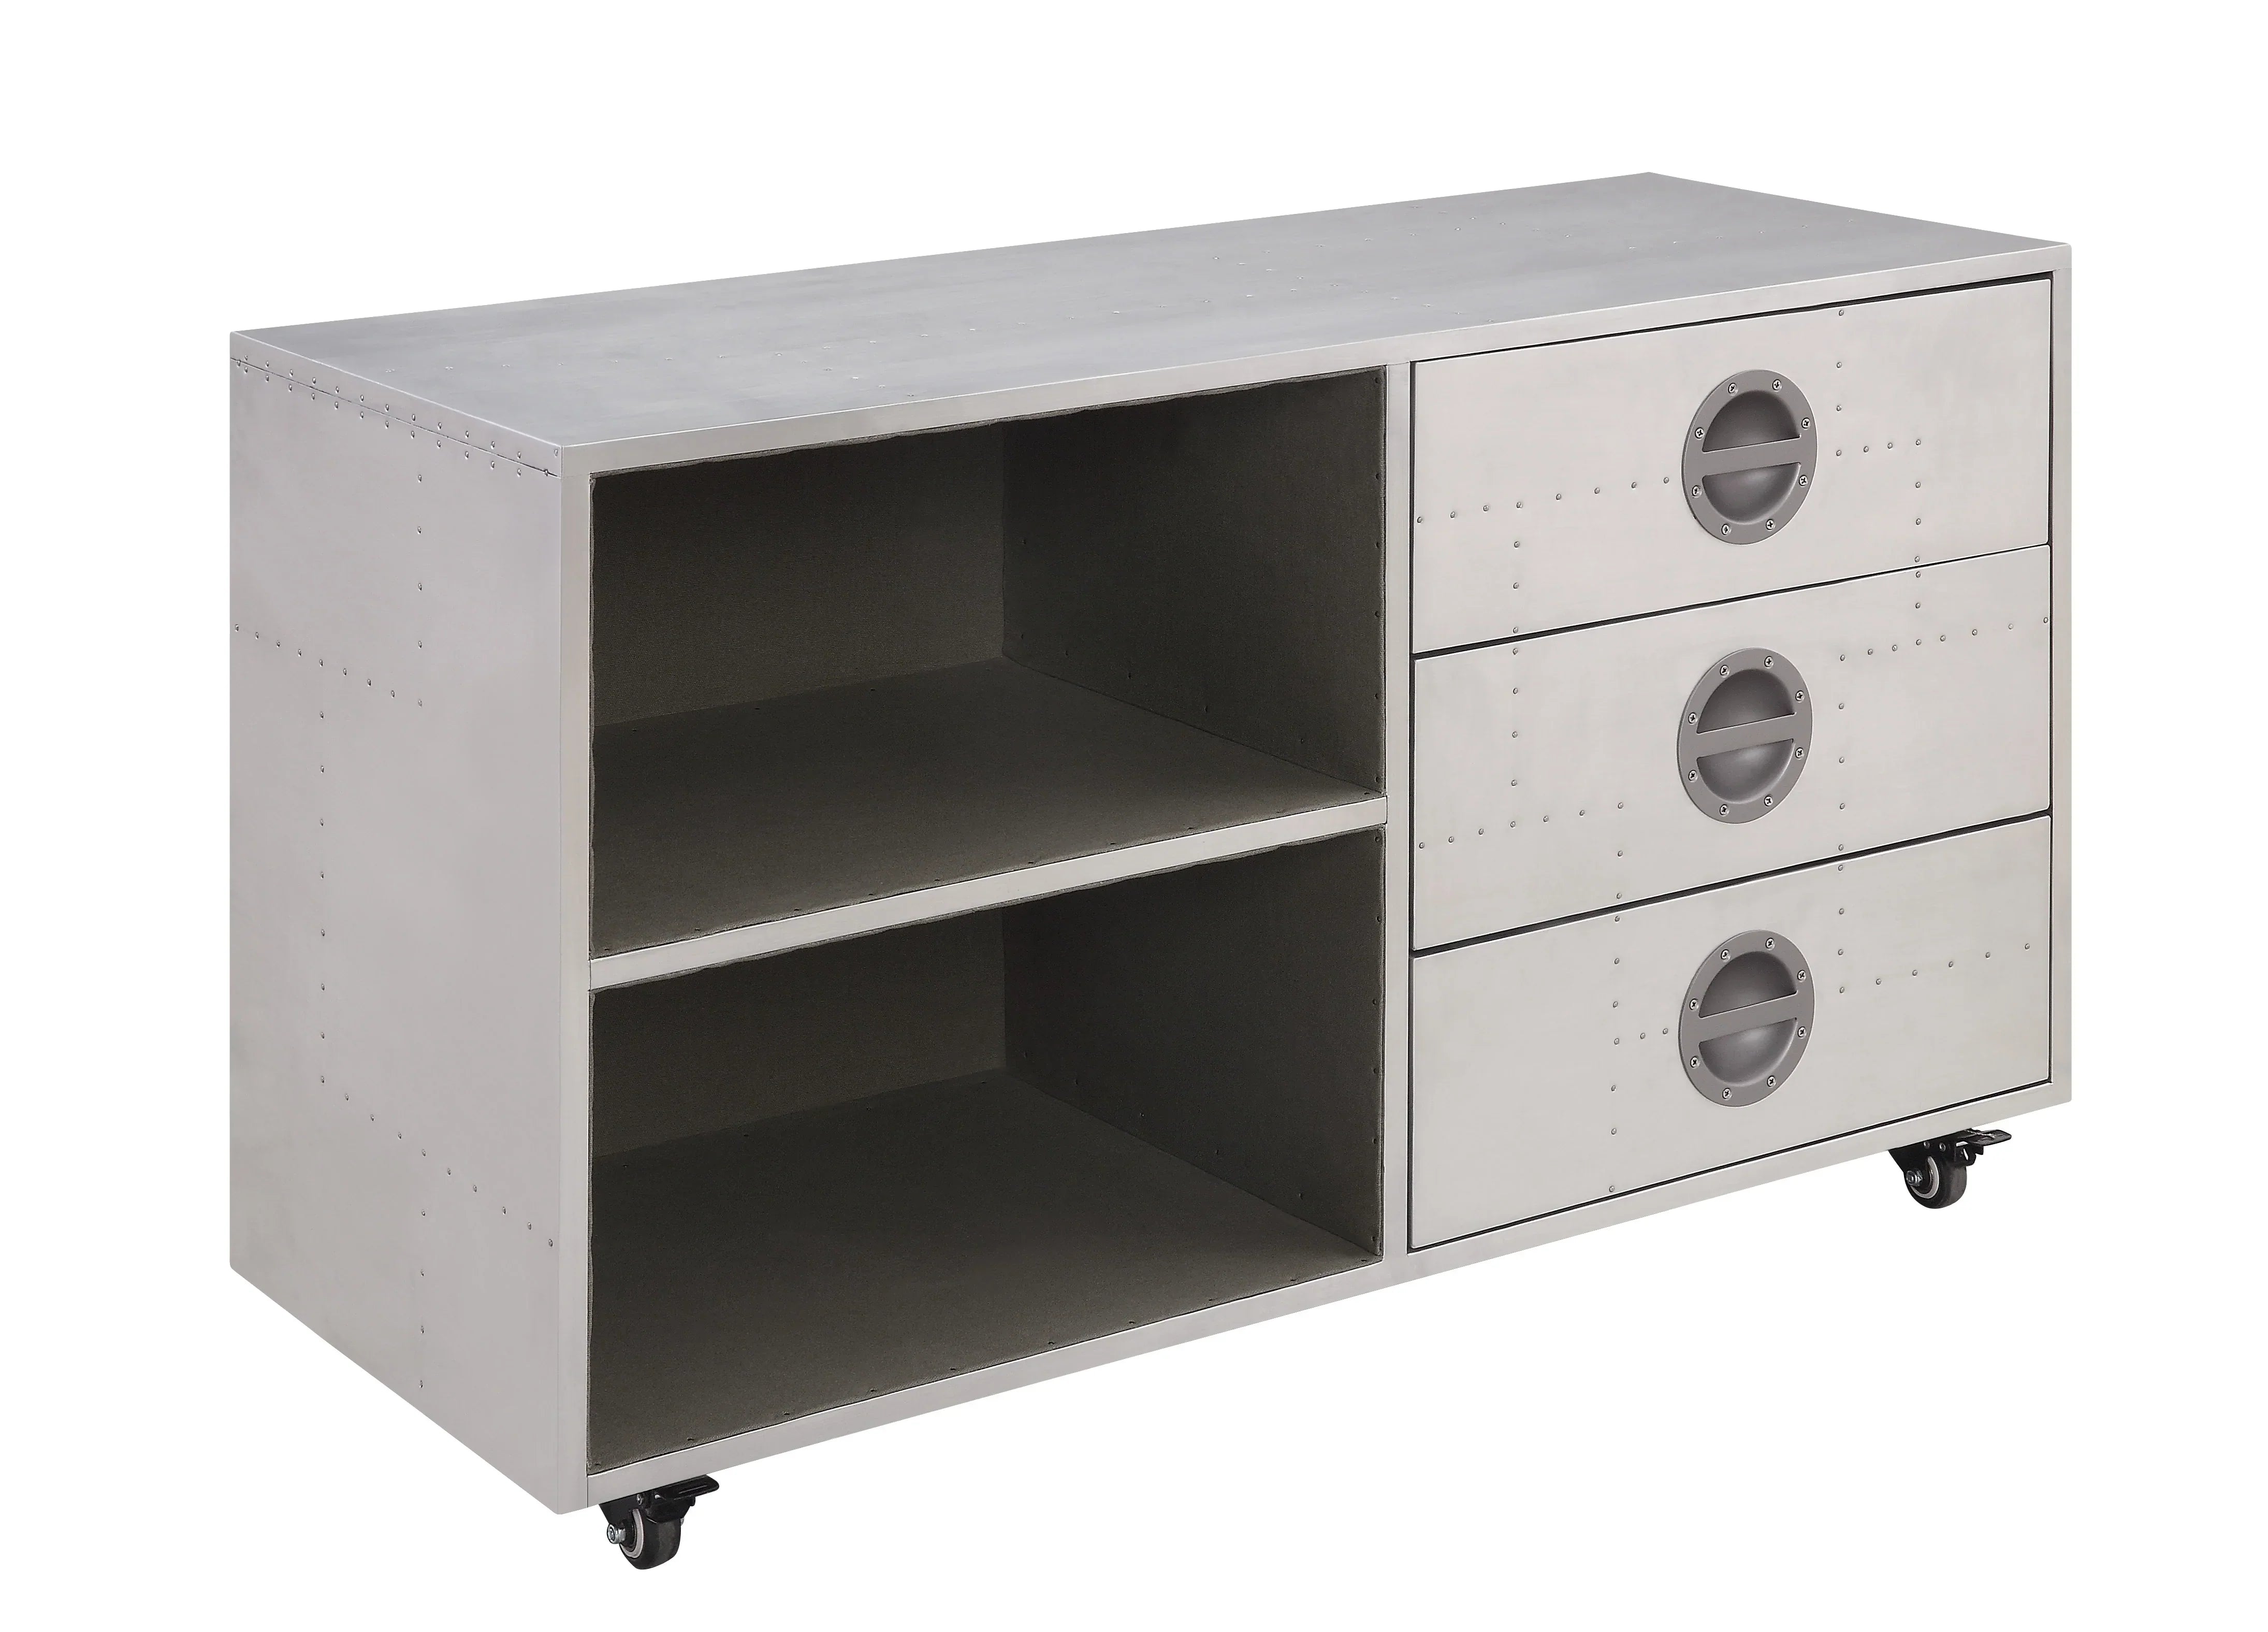 Brancaster Aluminum Cabinet Model 92427 By ACME Furniture